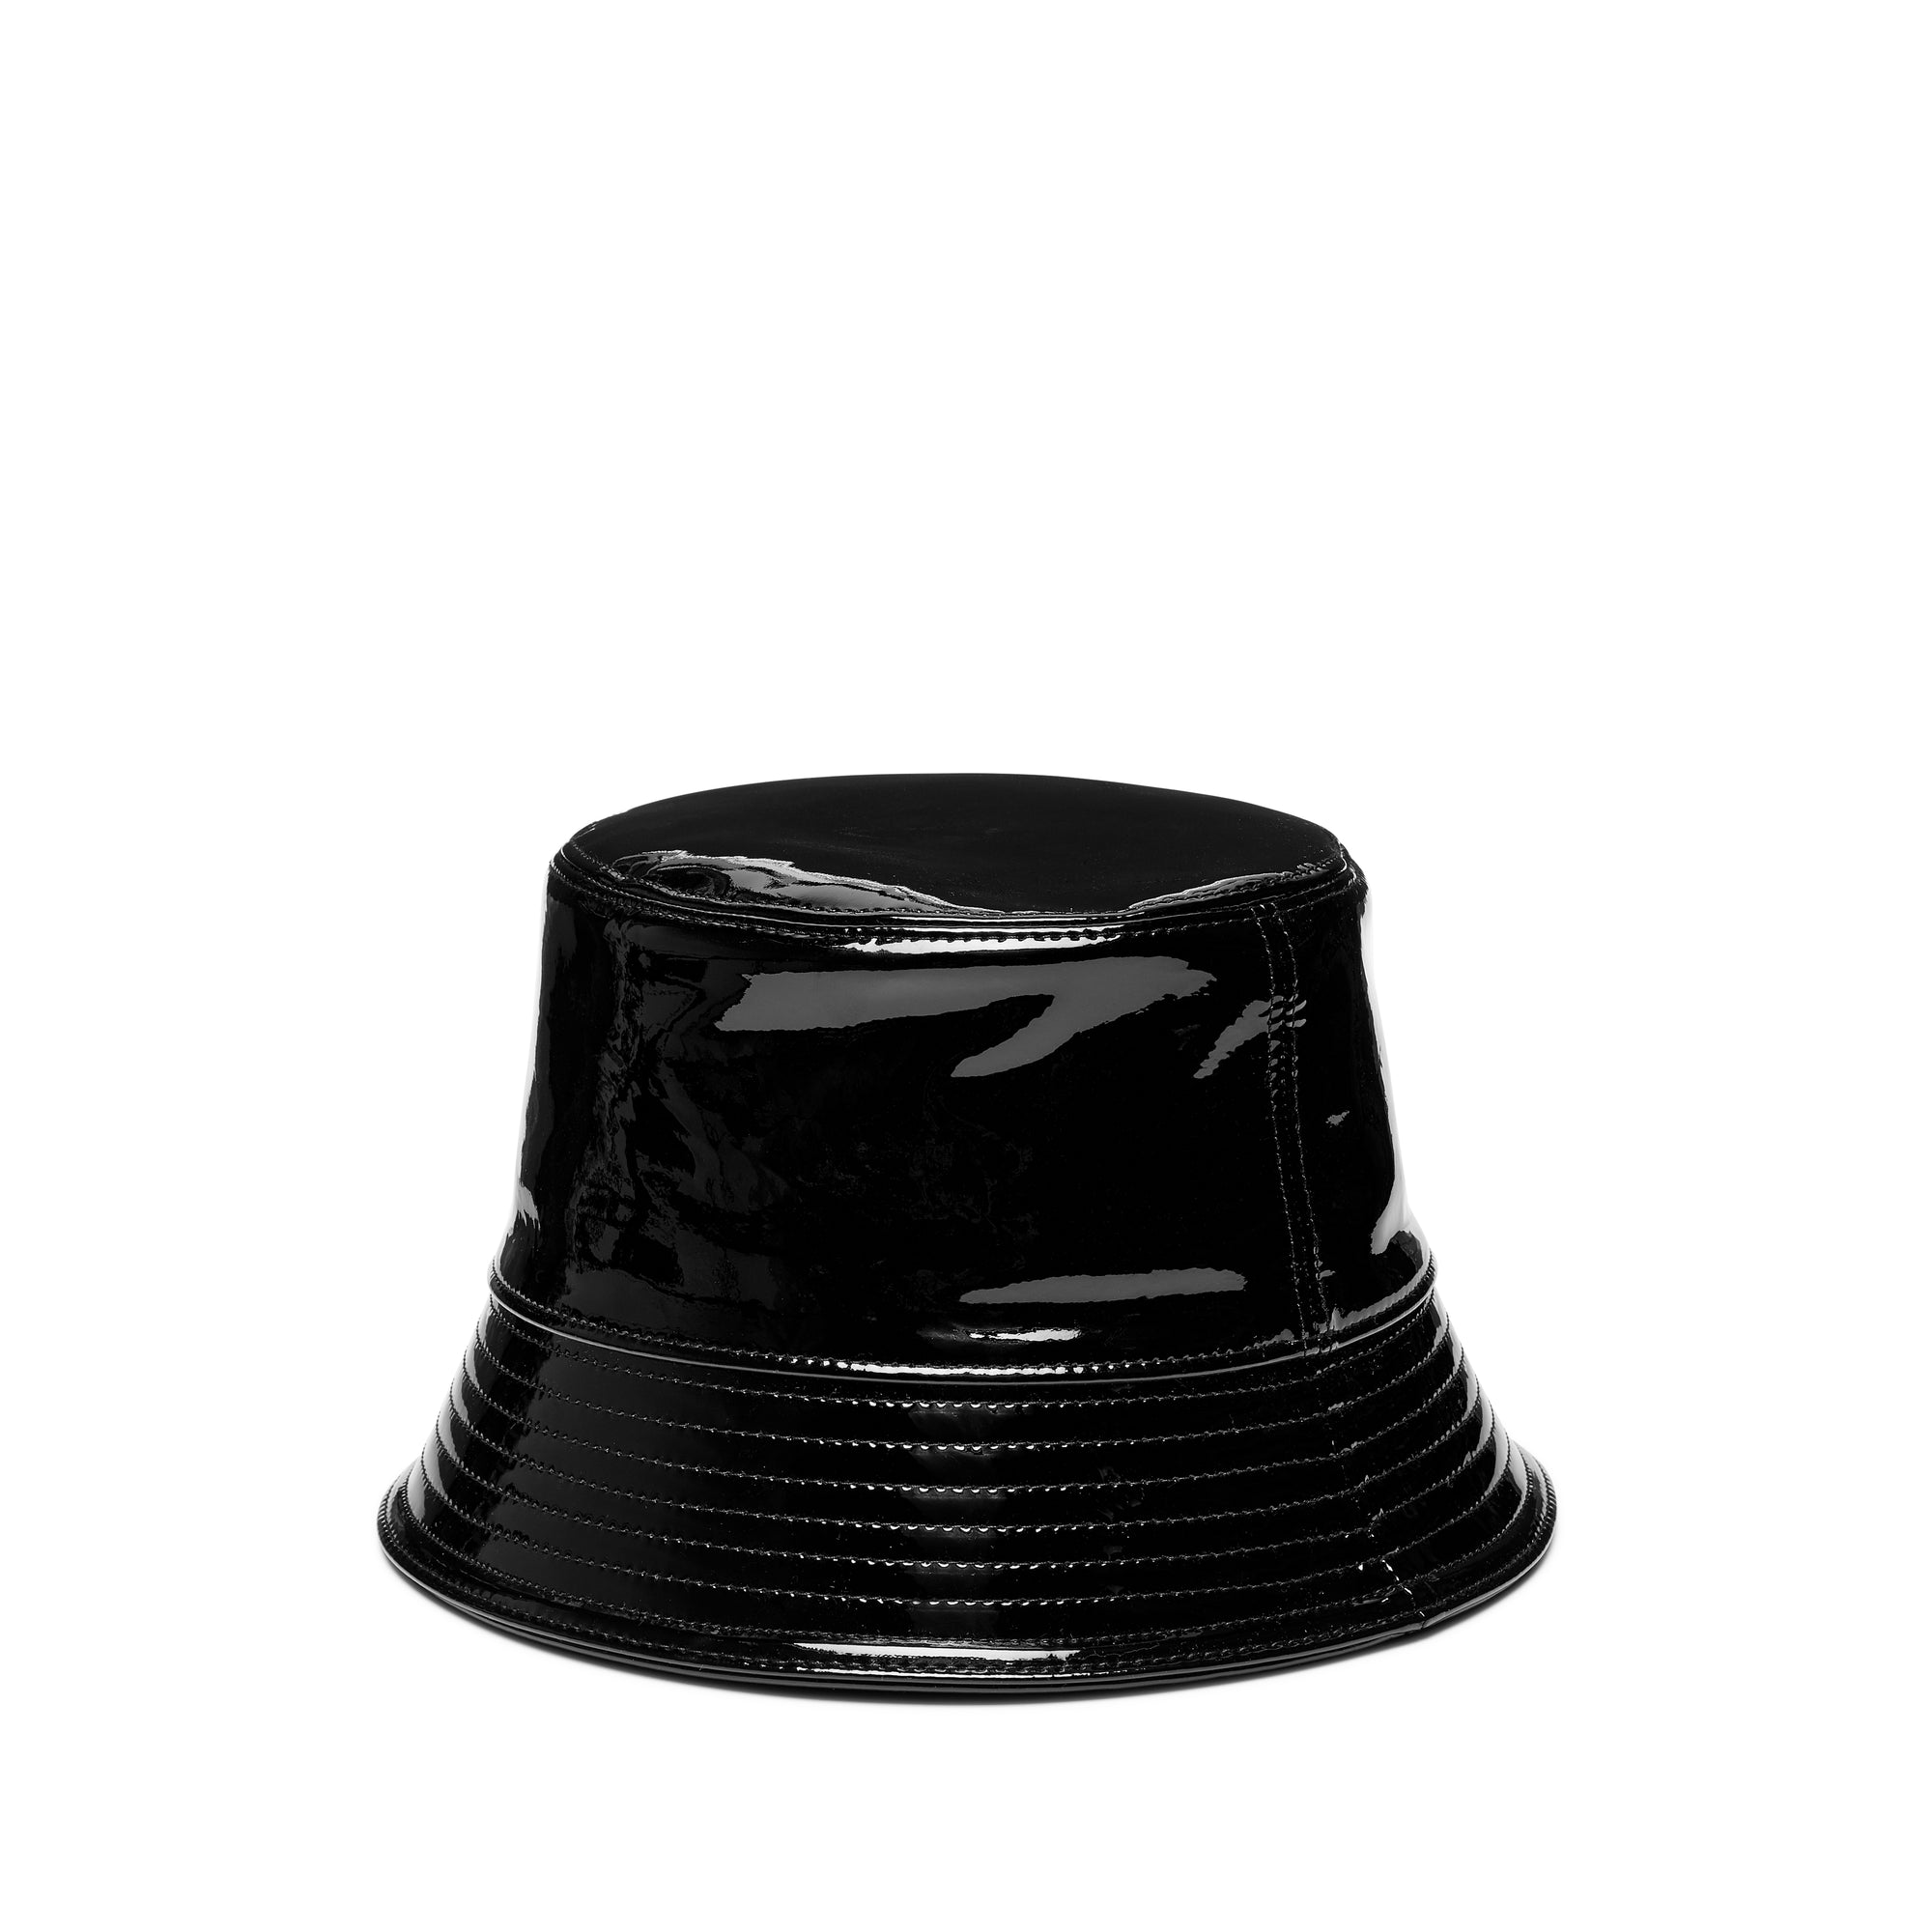 Prada - Women's Patent Leather Bucket Hat - (Black) view 3